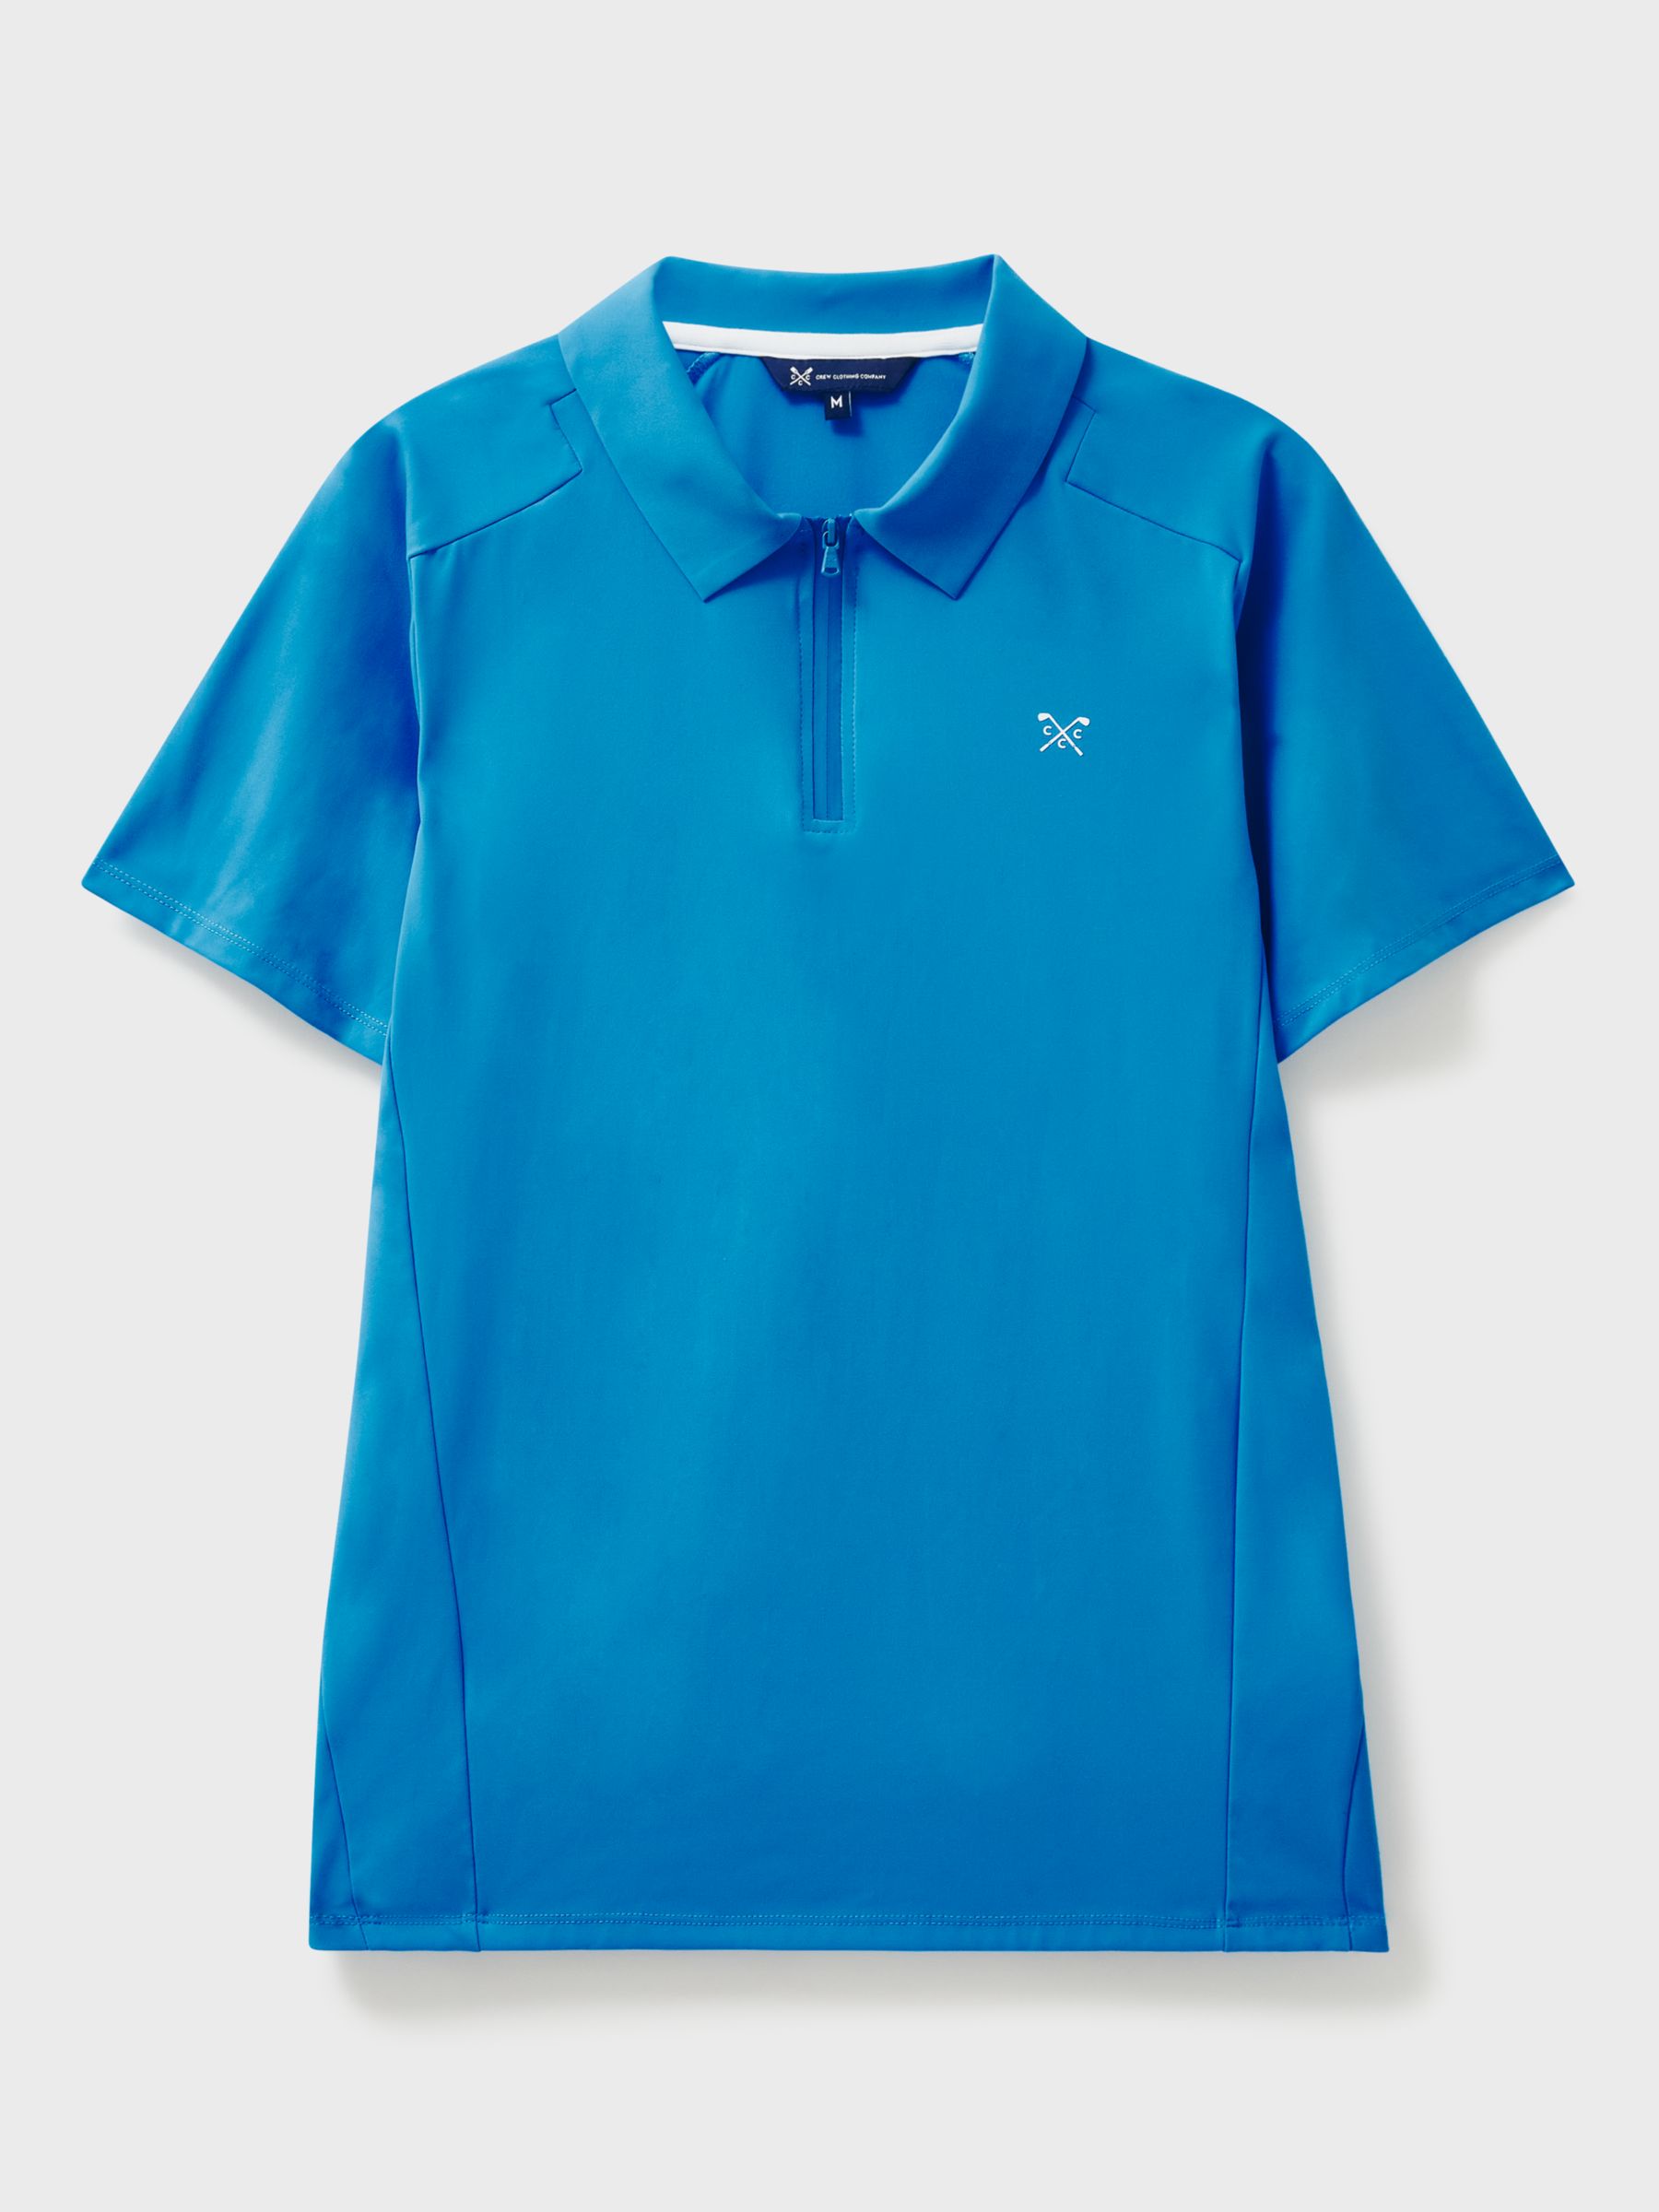 Crew Clothing Champion Golf Polo Shirt, Blue, XS